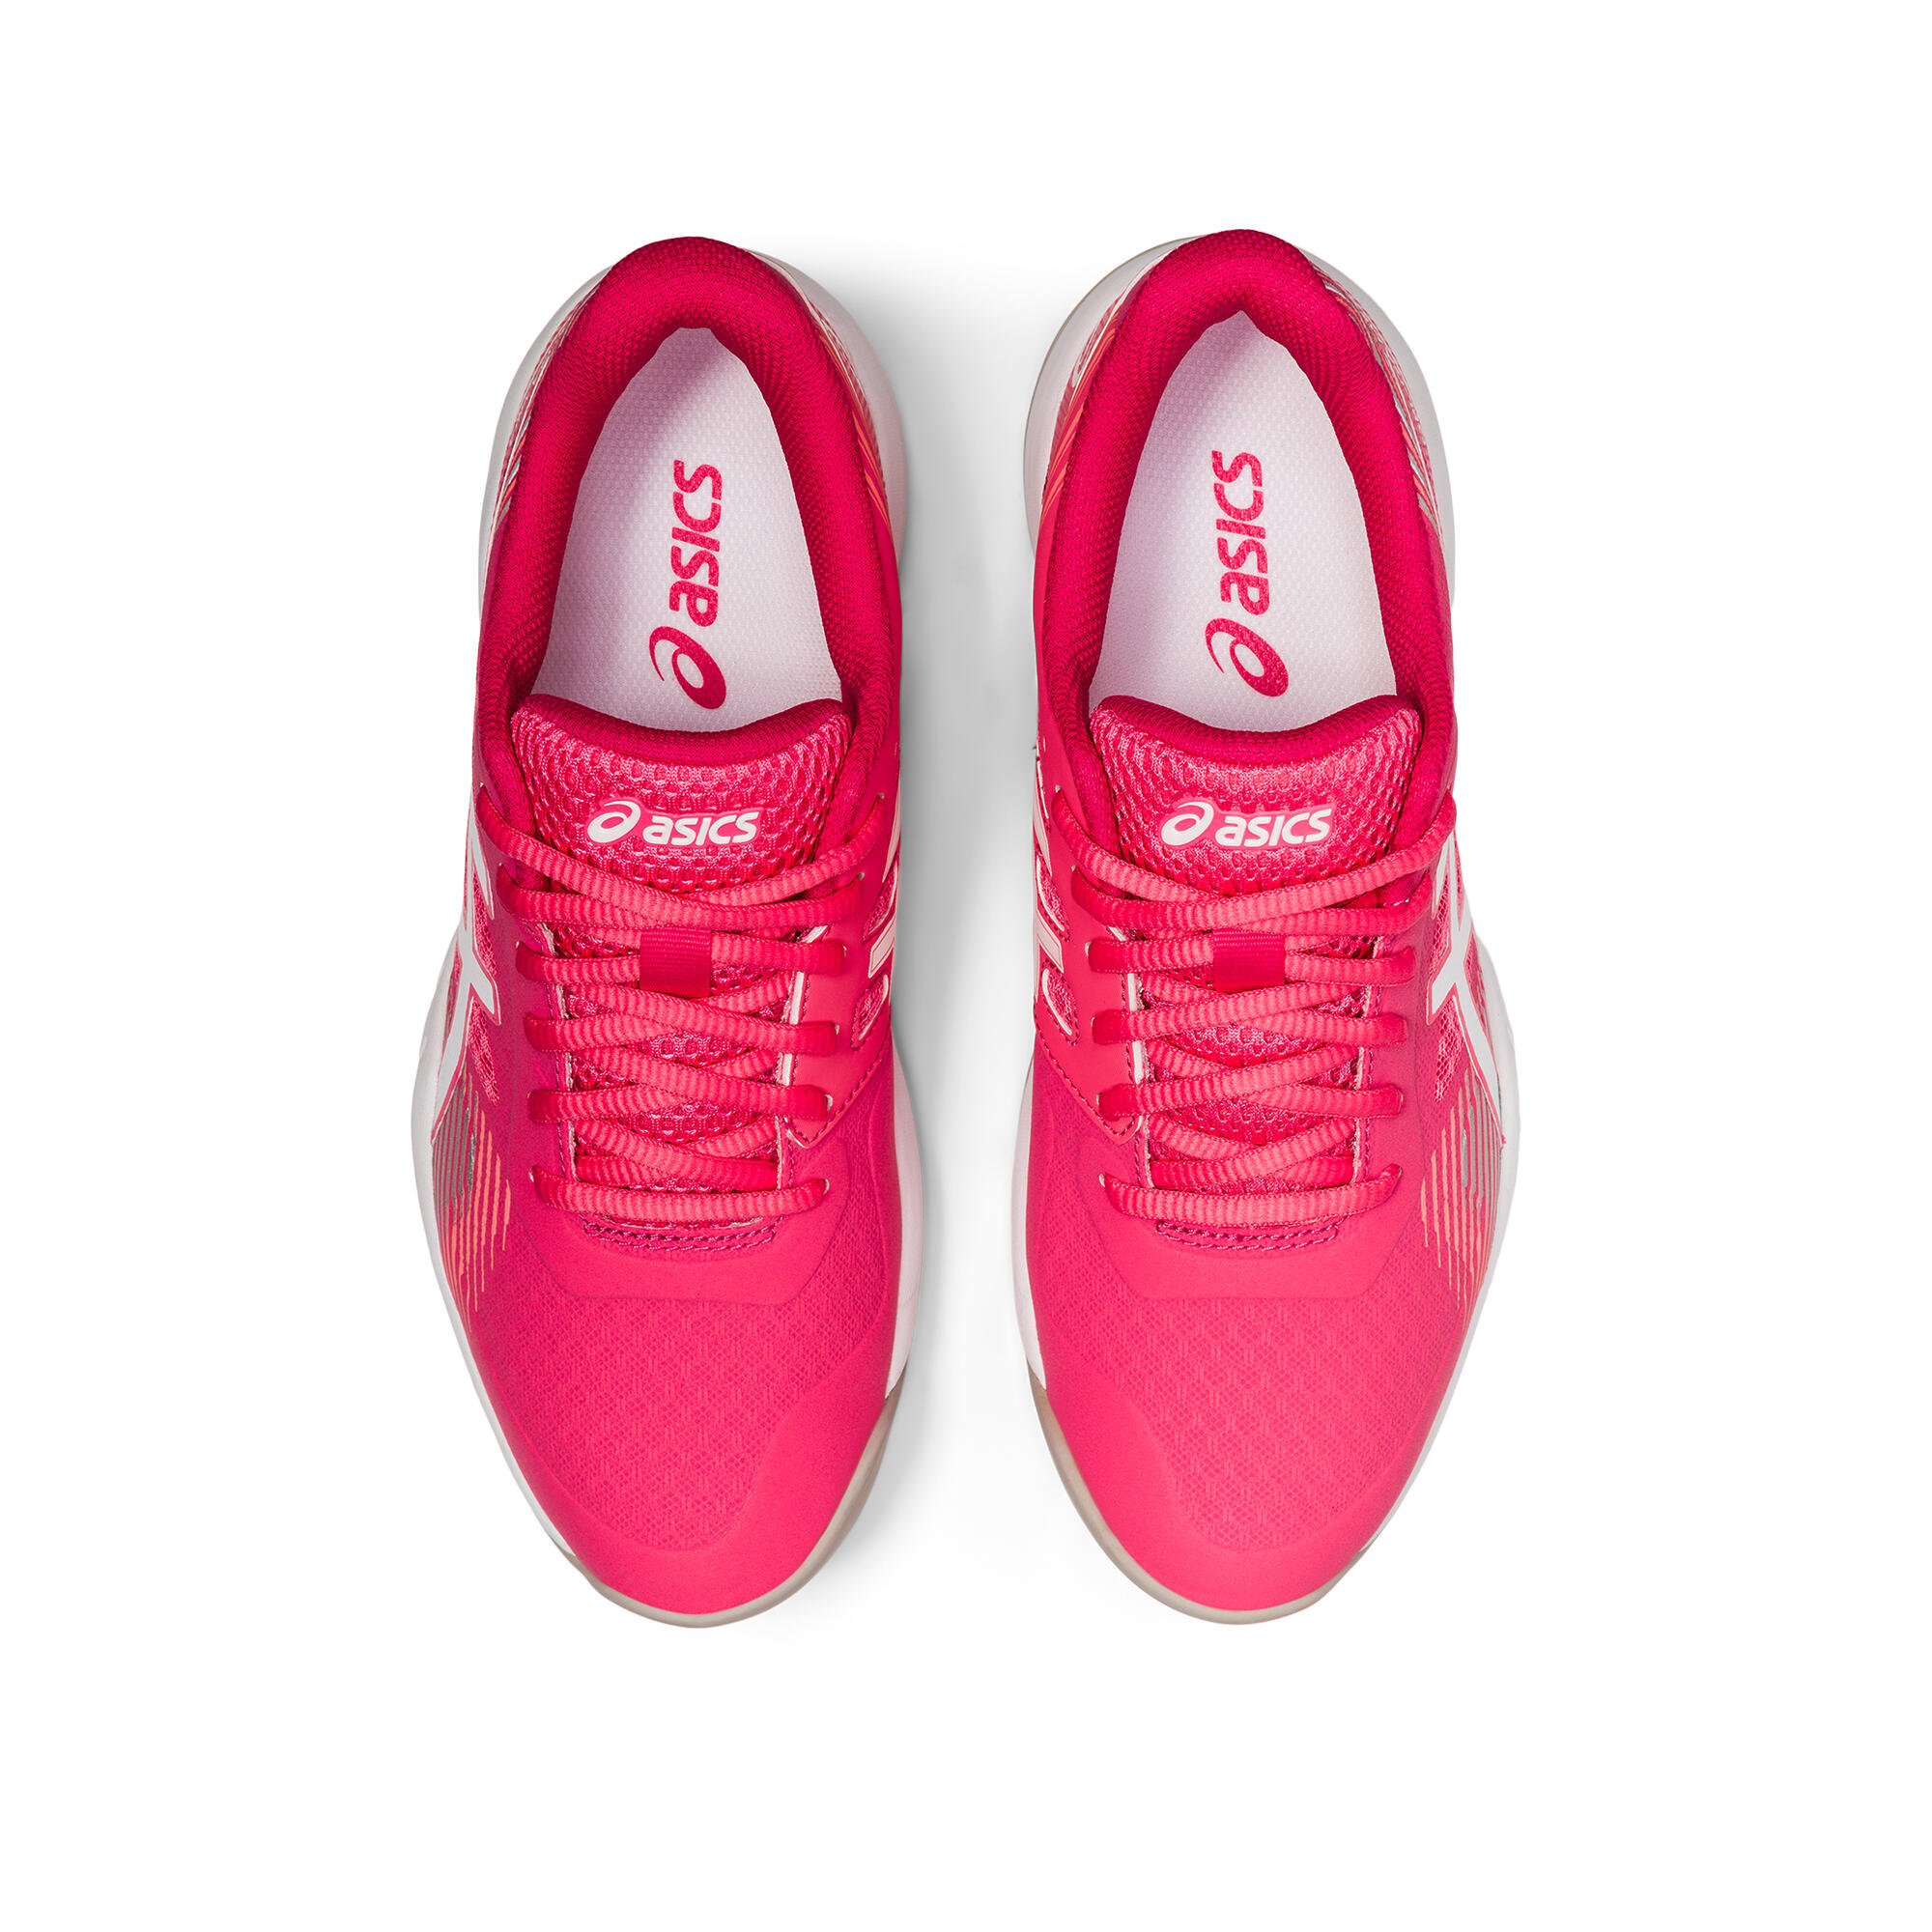 Women's Tennis Shoes Gel Game - Pink/White 6/7